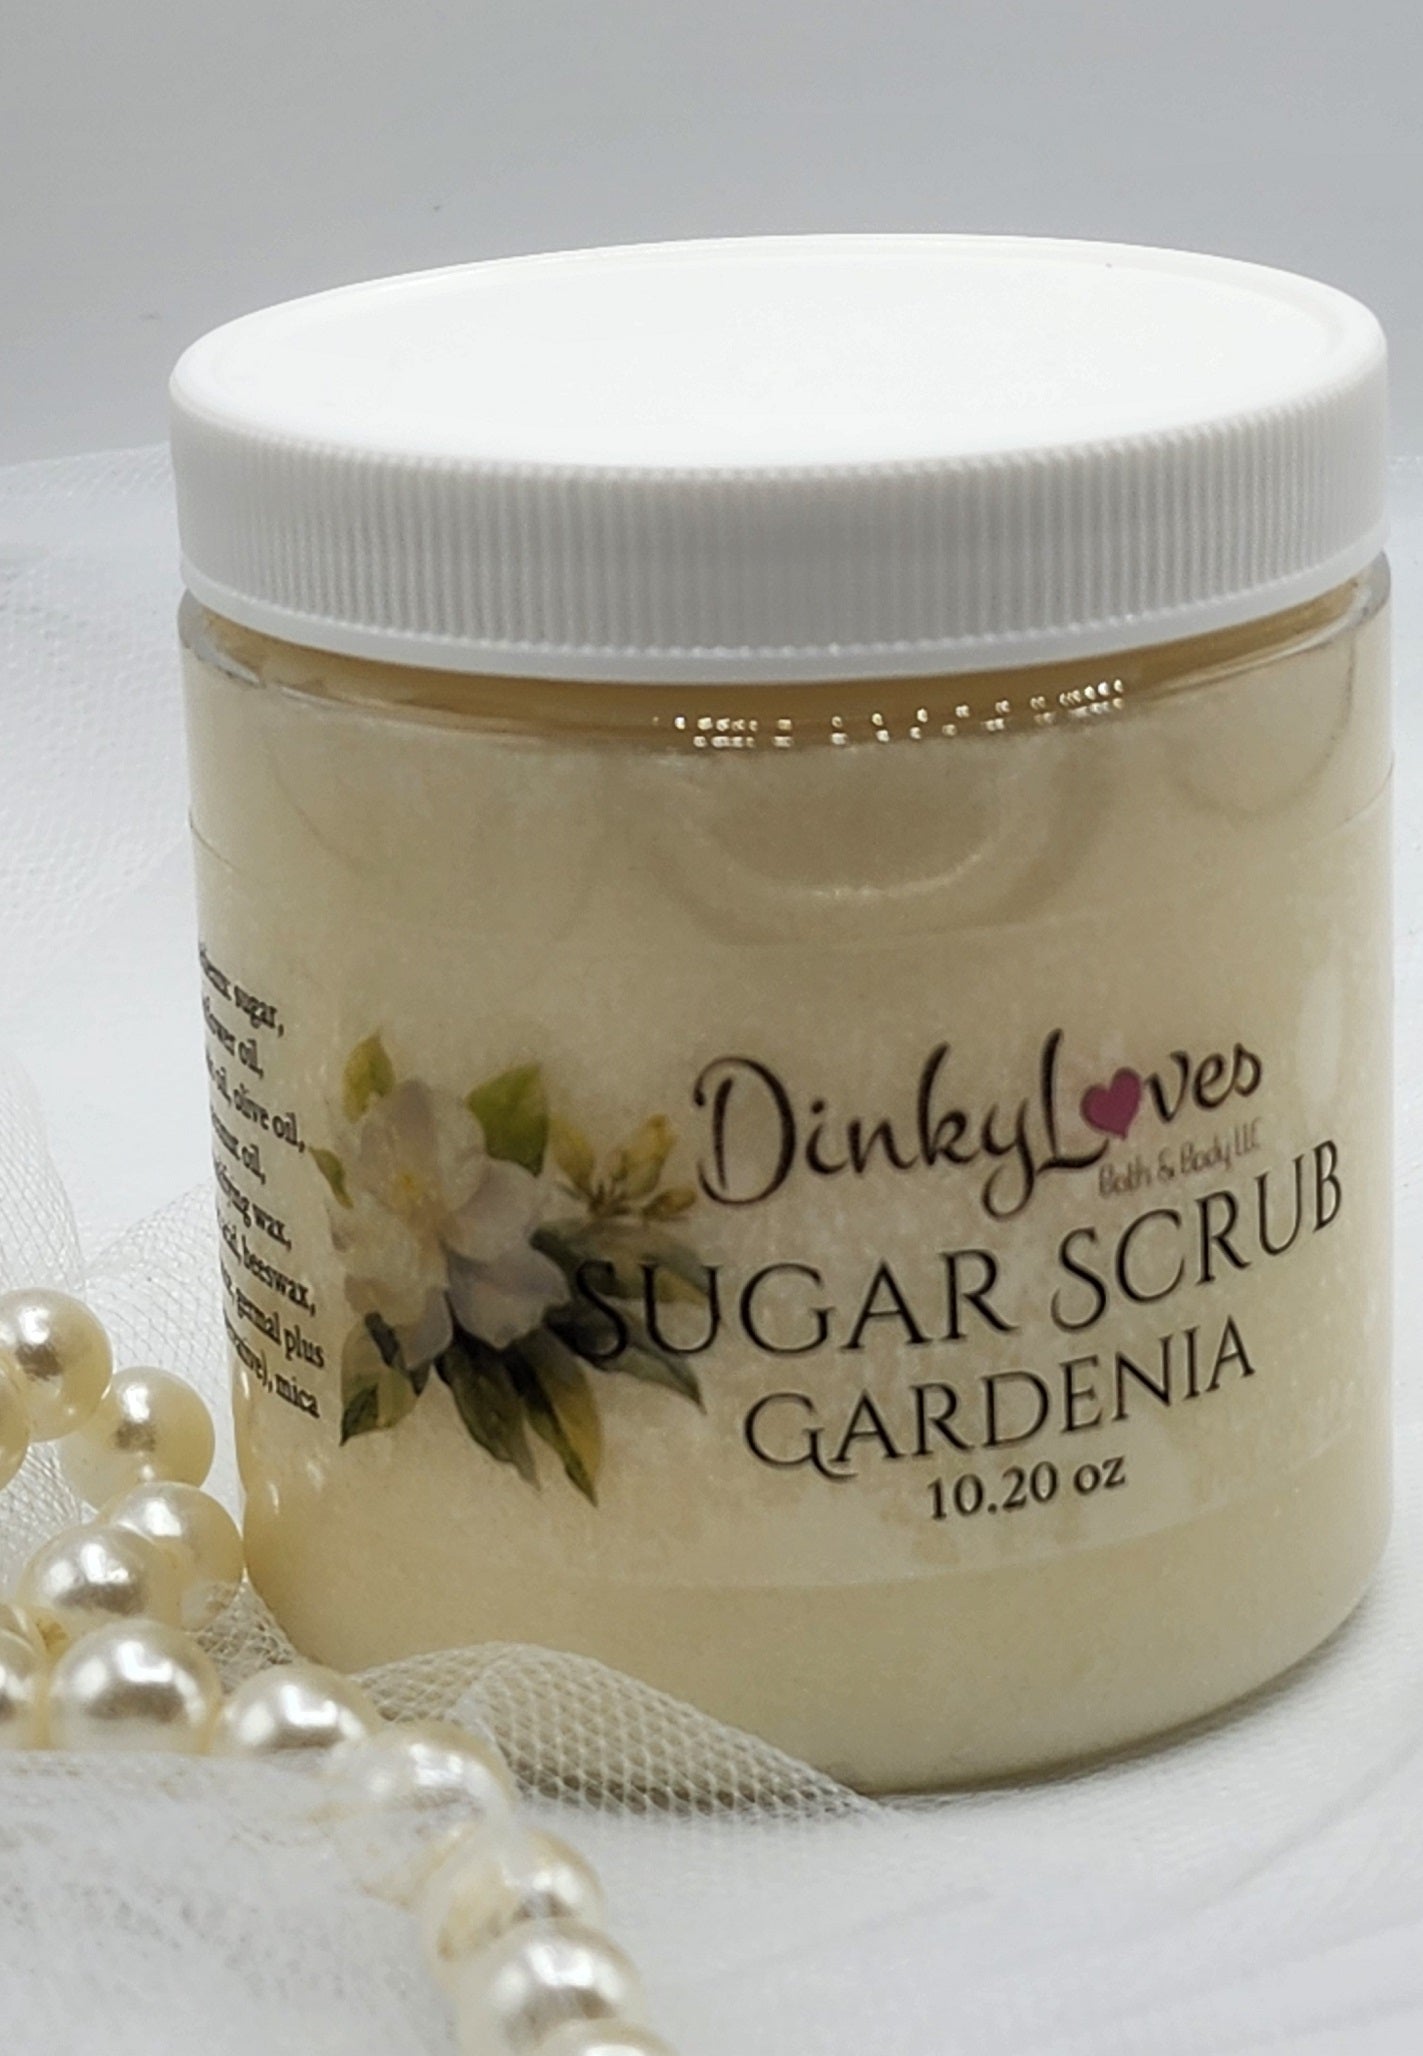 GARDENIA / Sugar Scrub / Unique Gift Idea / Handmade Sugar Scrub